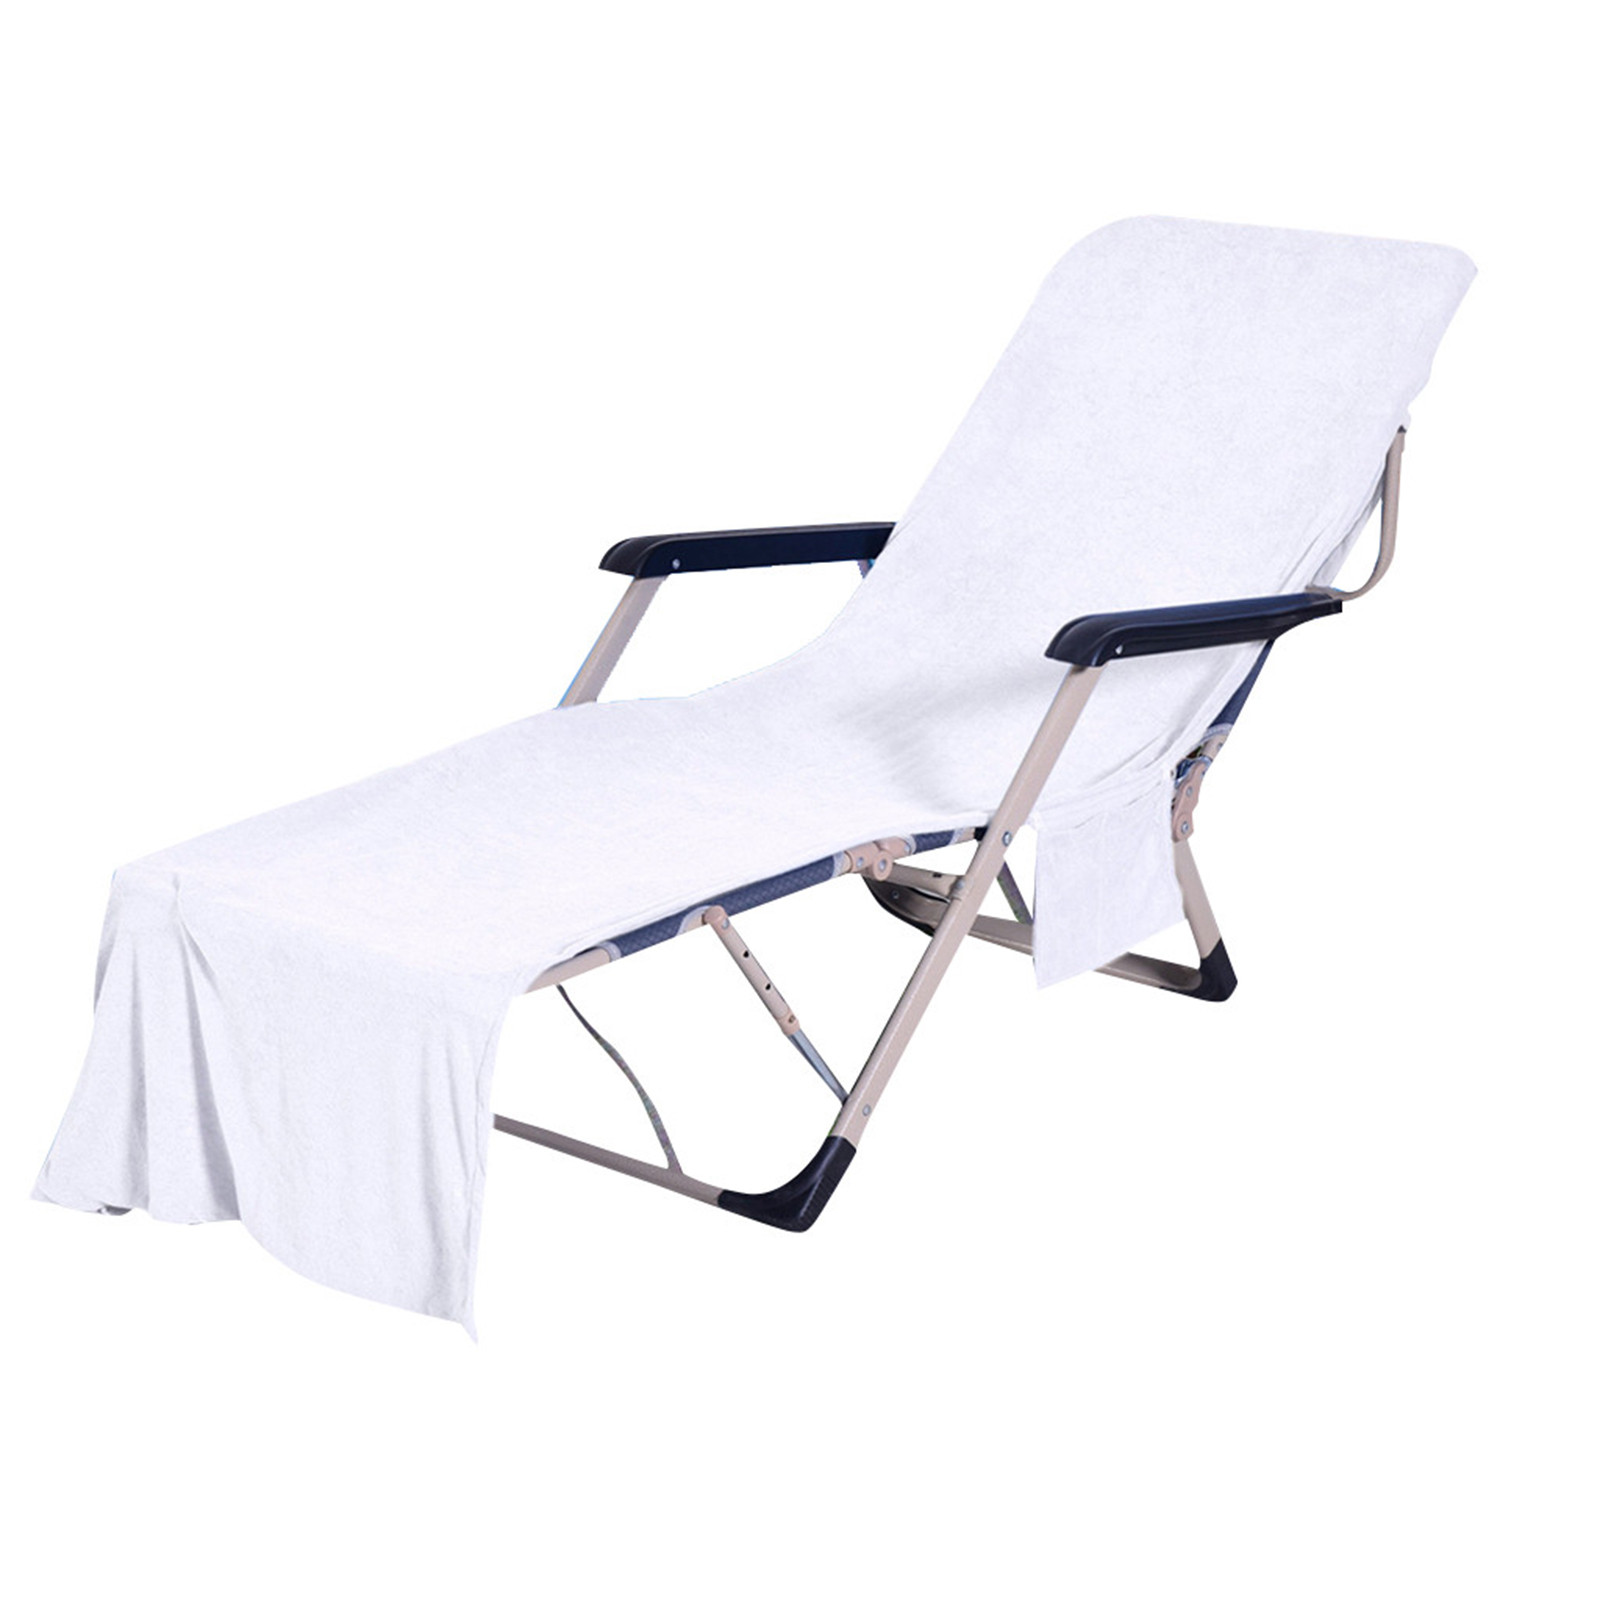 Wovilon Chair Beach Towel Lounge Chair Beach Towel Cover Microfiber Pool Lounge Chair - image 1 of 9